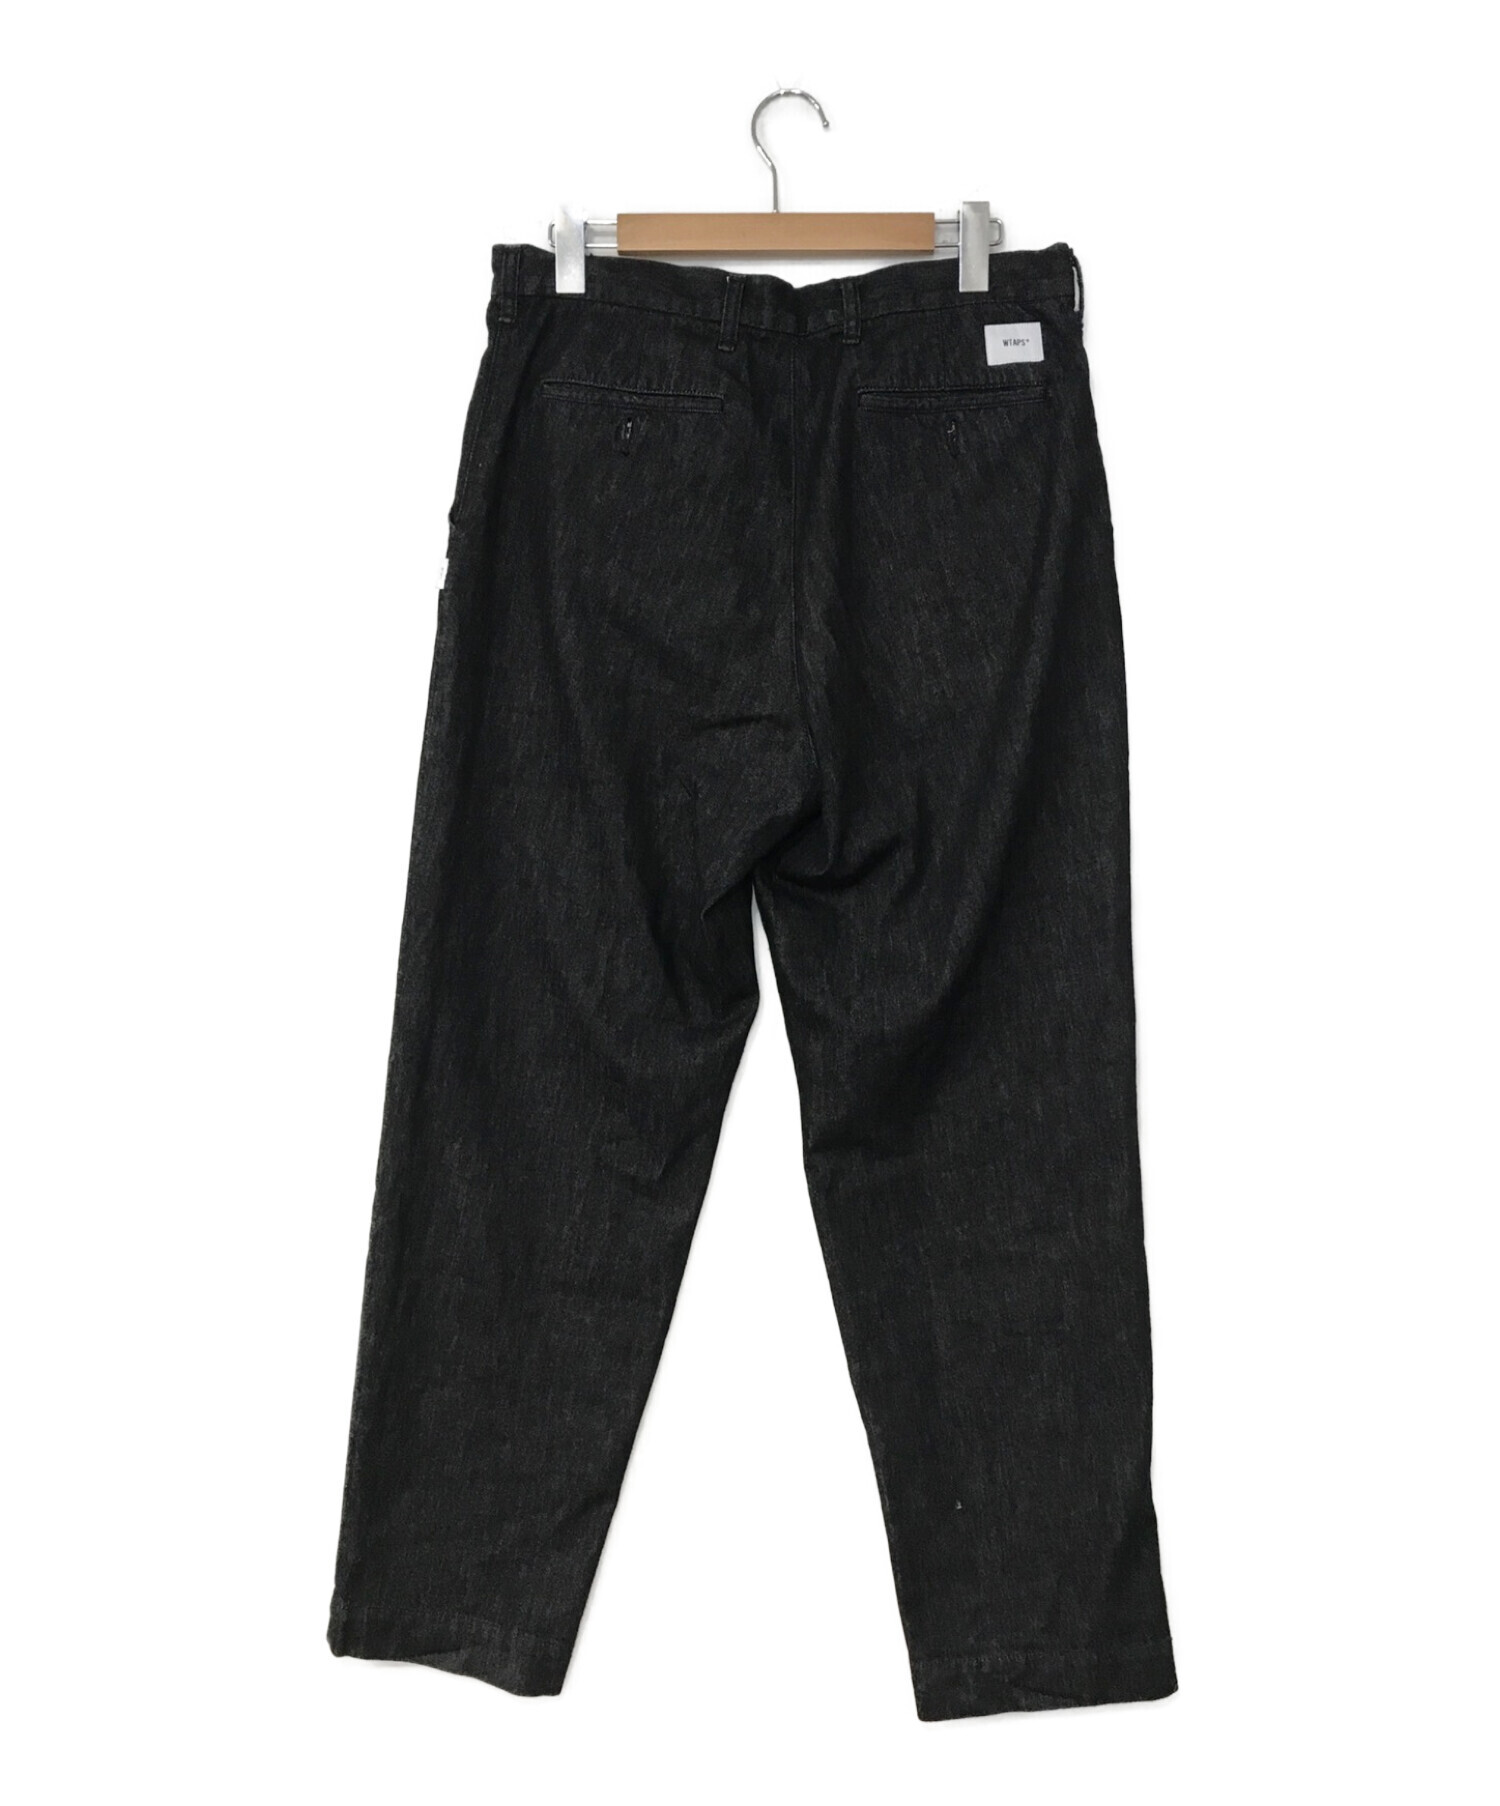 Wtaps black pants size 03